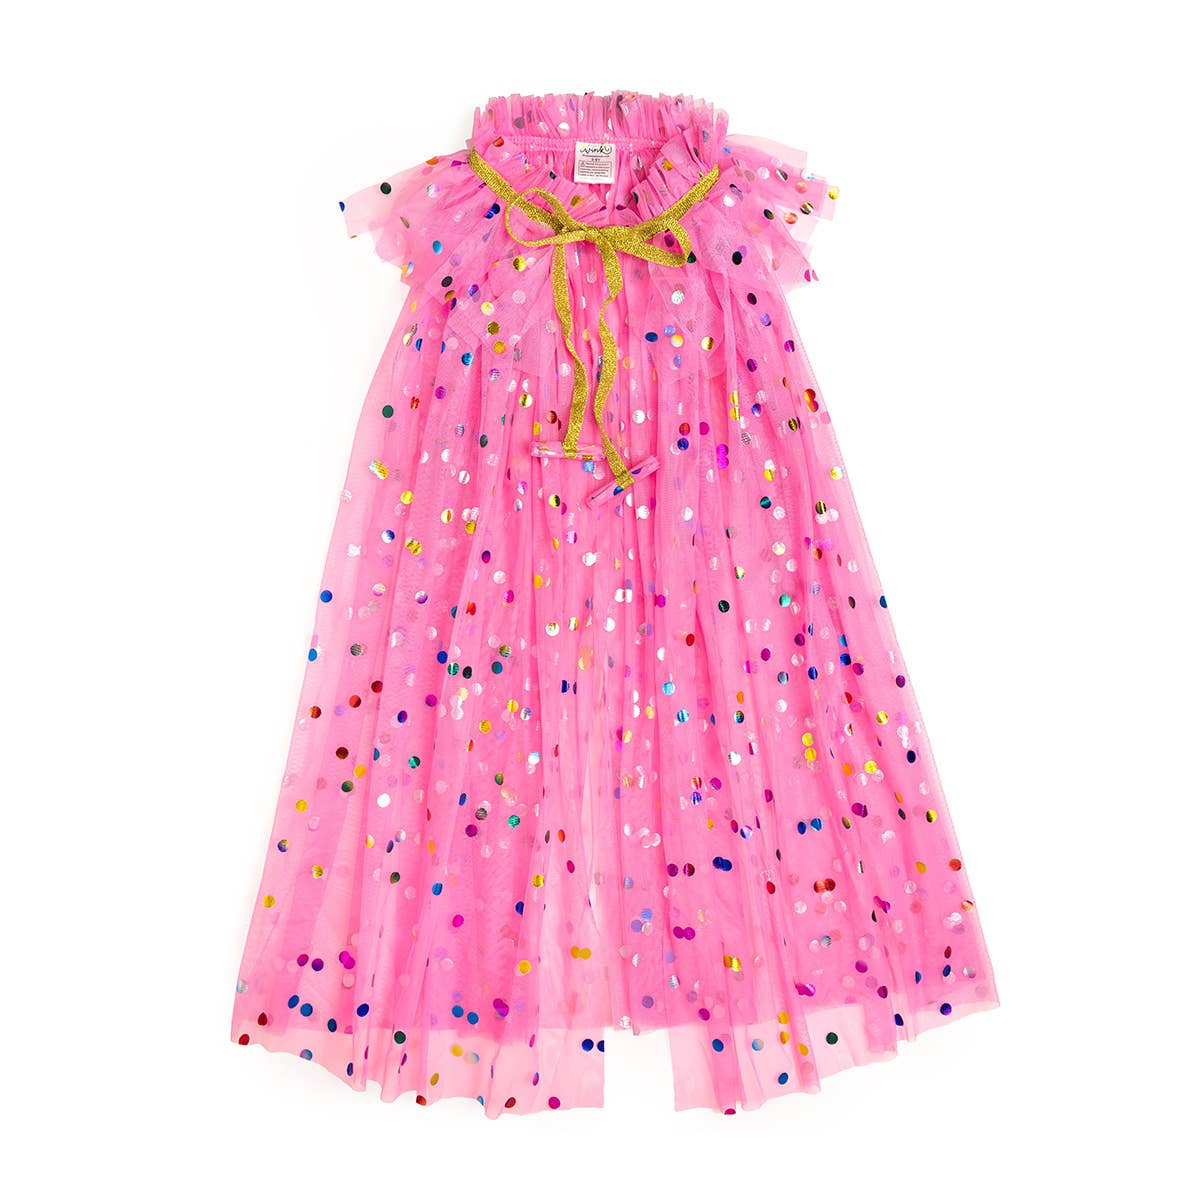 Raspberry Confetti Cape - Kids Dress Up Cape